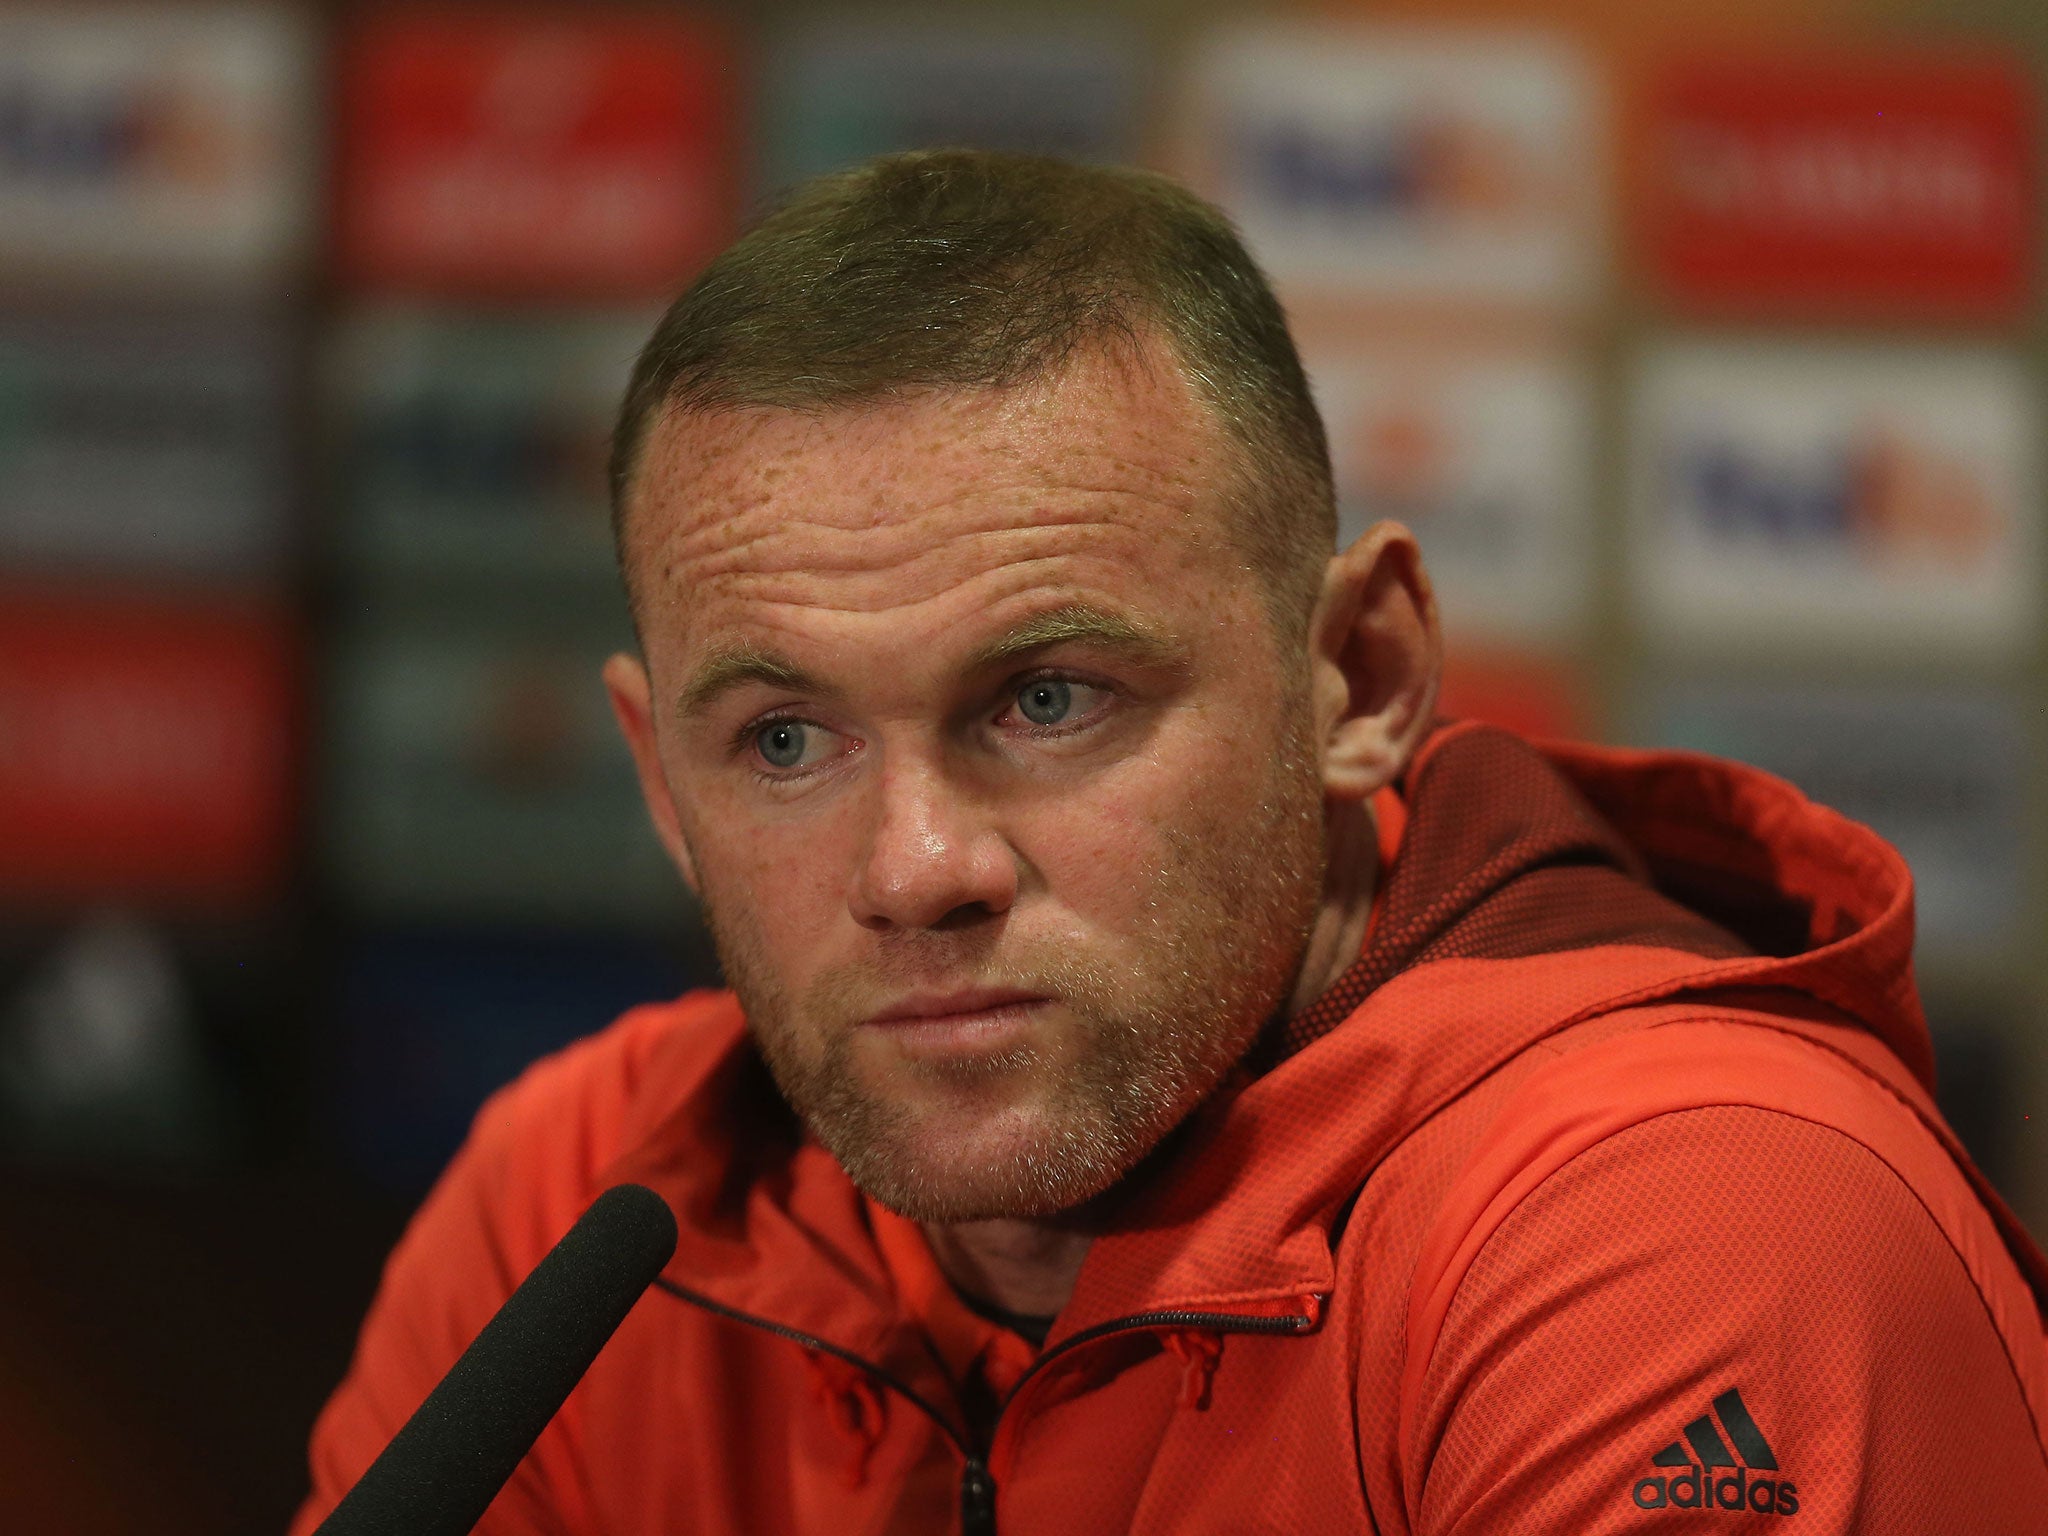 Wayne Rooney was speaking ahead of United's second-leg semi-final against Celta Vigo in the Europa League